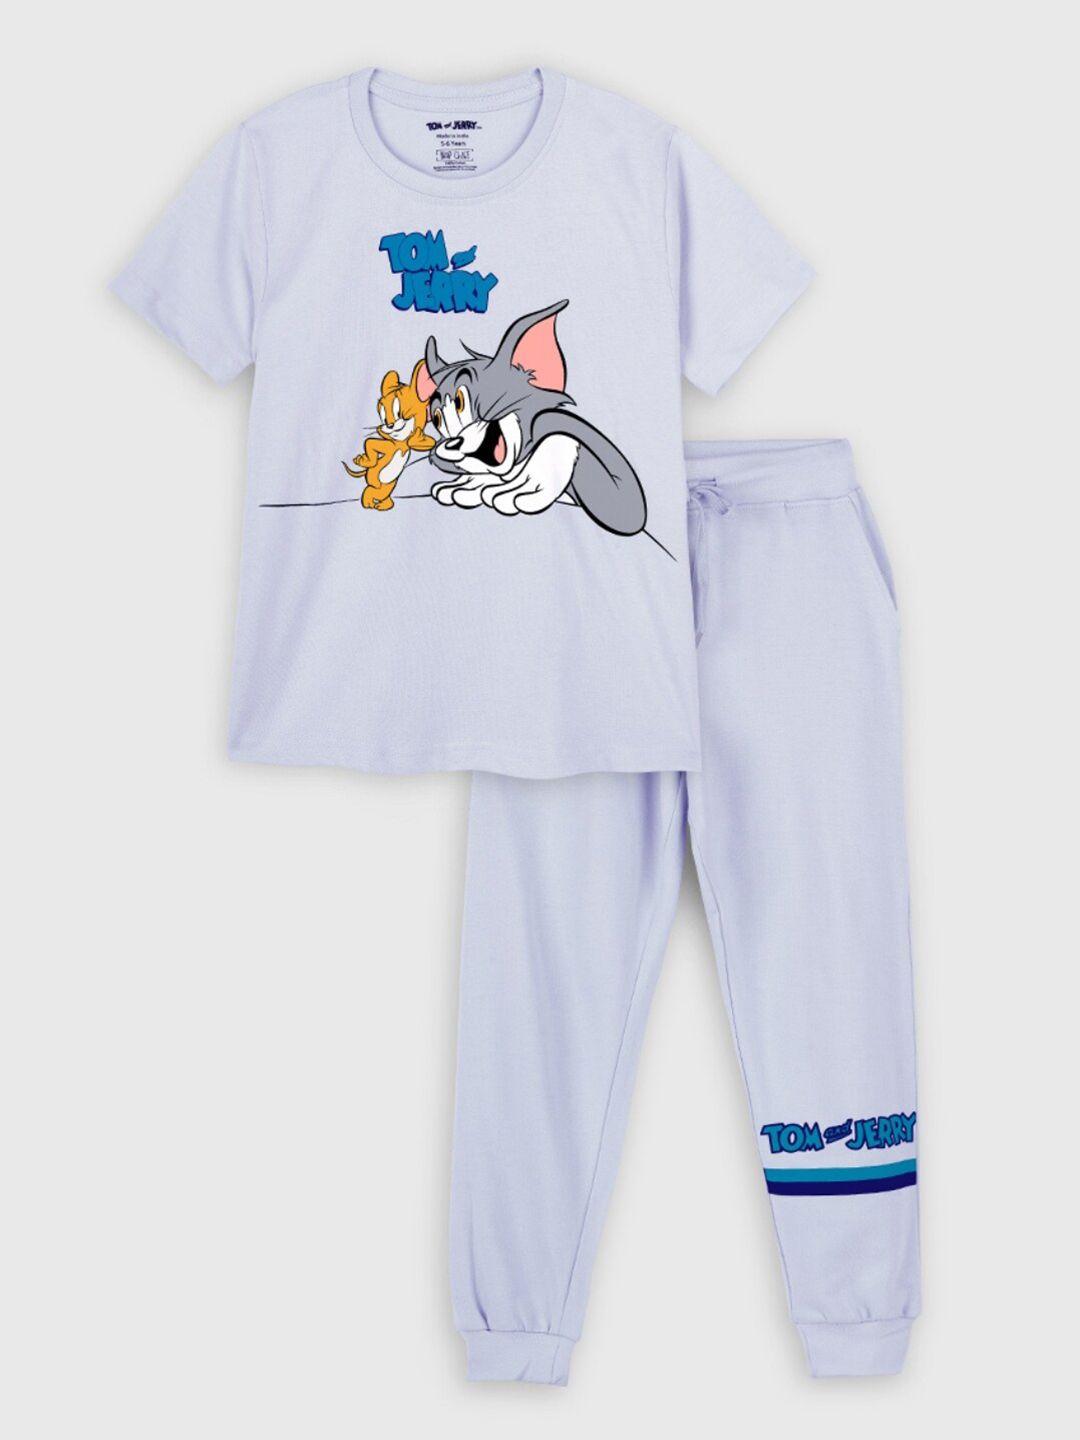 nap chief unisex kids blue & grey printed t-shirt with pyjamas